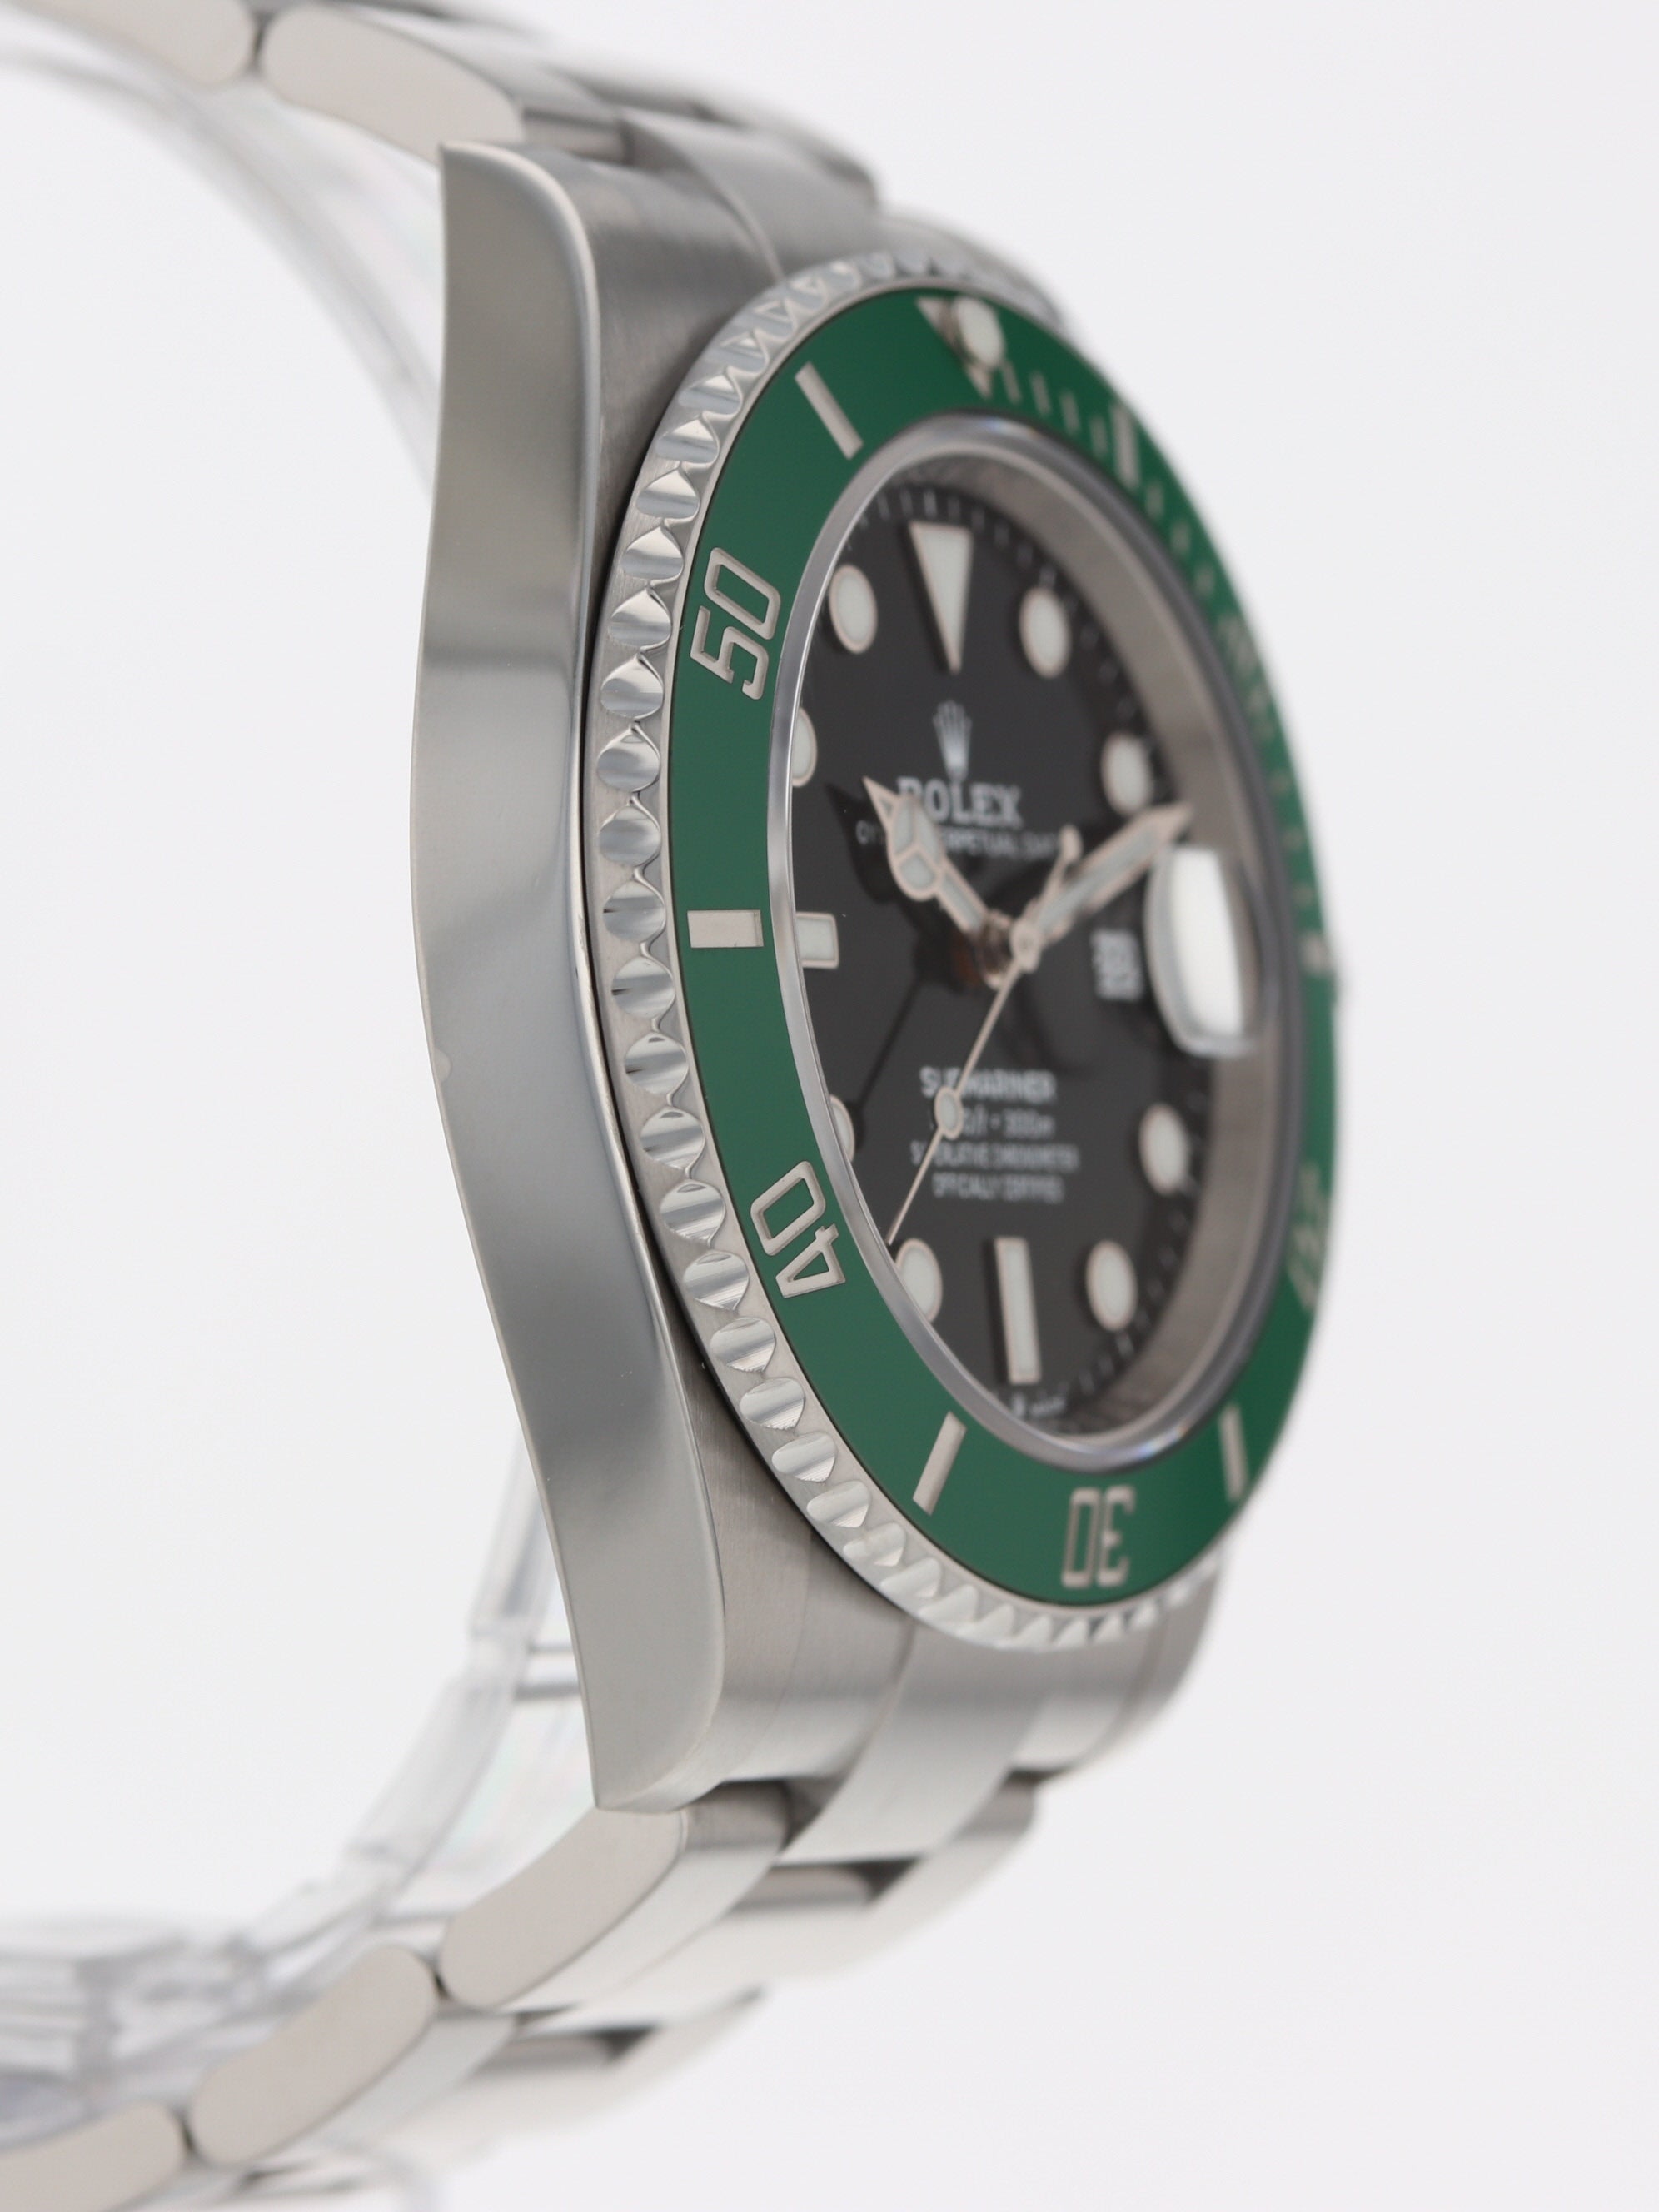 Rolex Submariner 126610LV – ALMA Watches